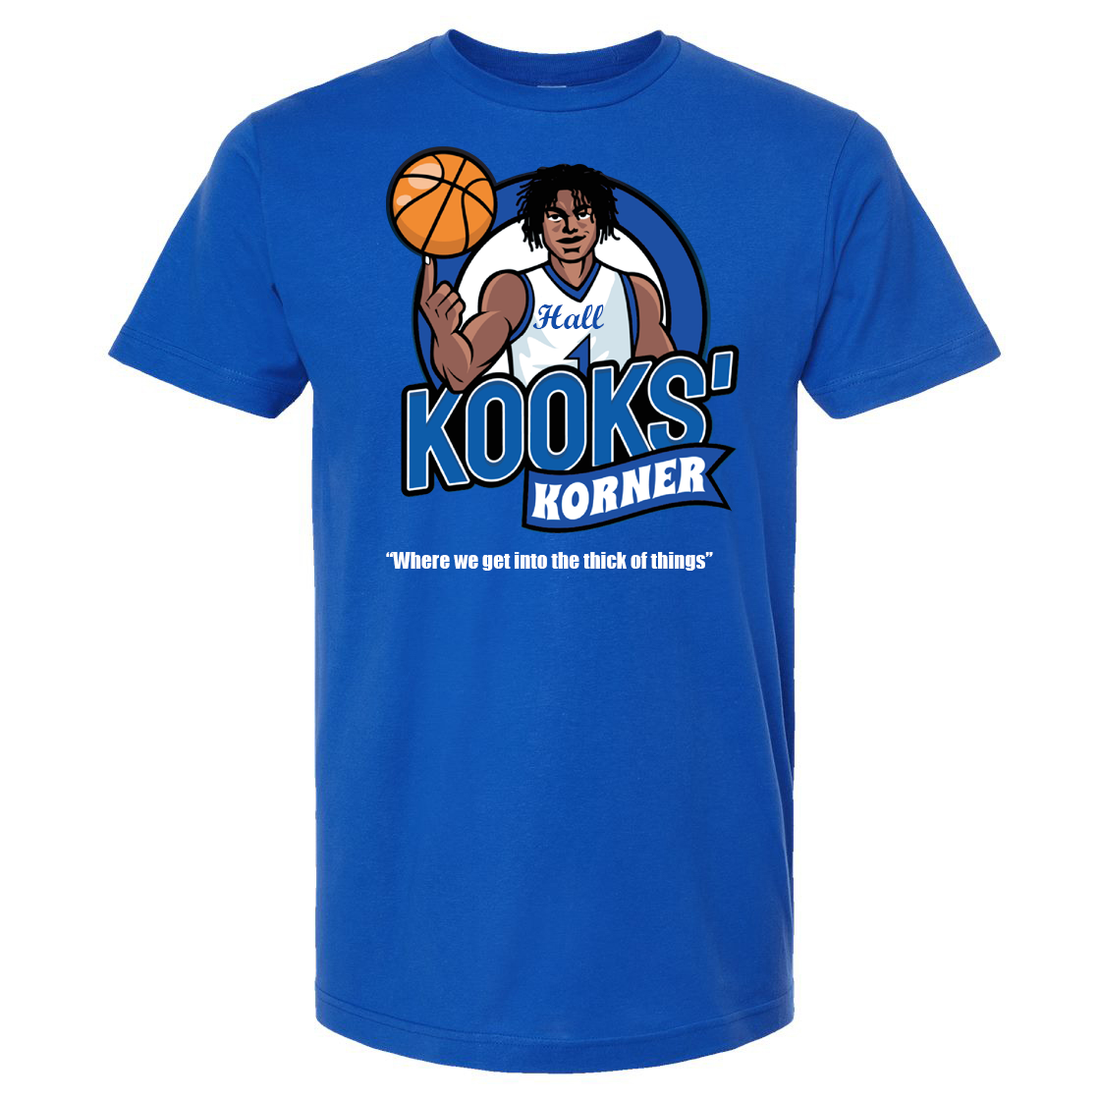 Kadary Richmond "Kooks Korner" Tee shirt Designed by Mason Bashkoff